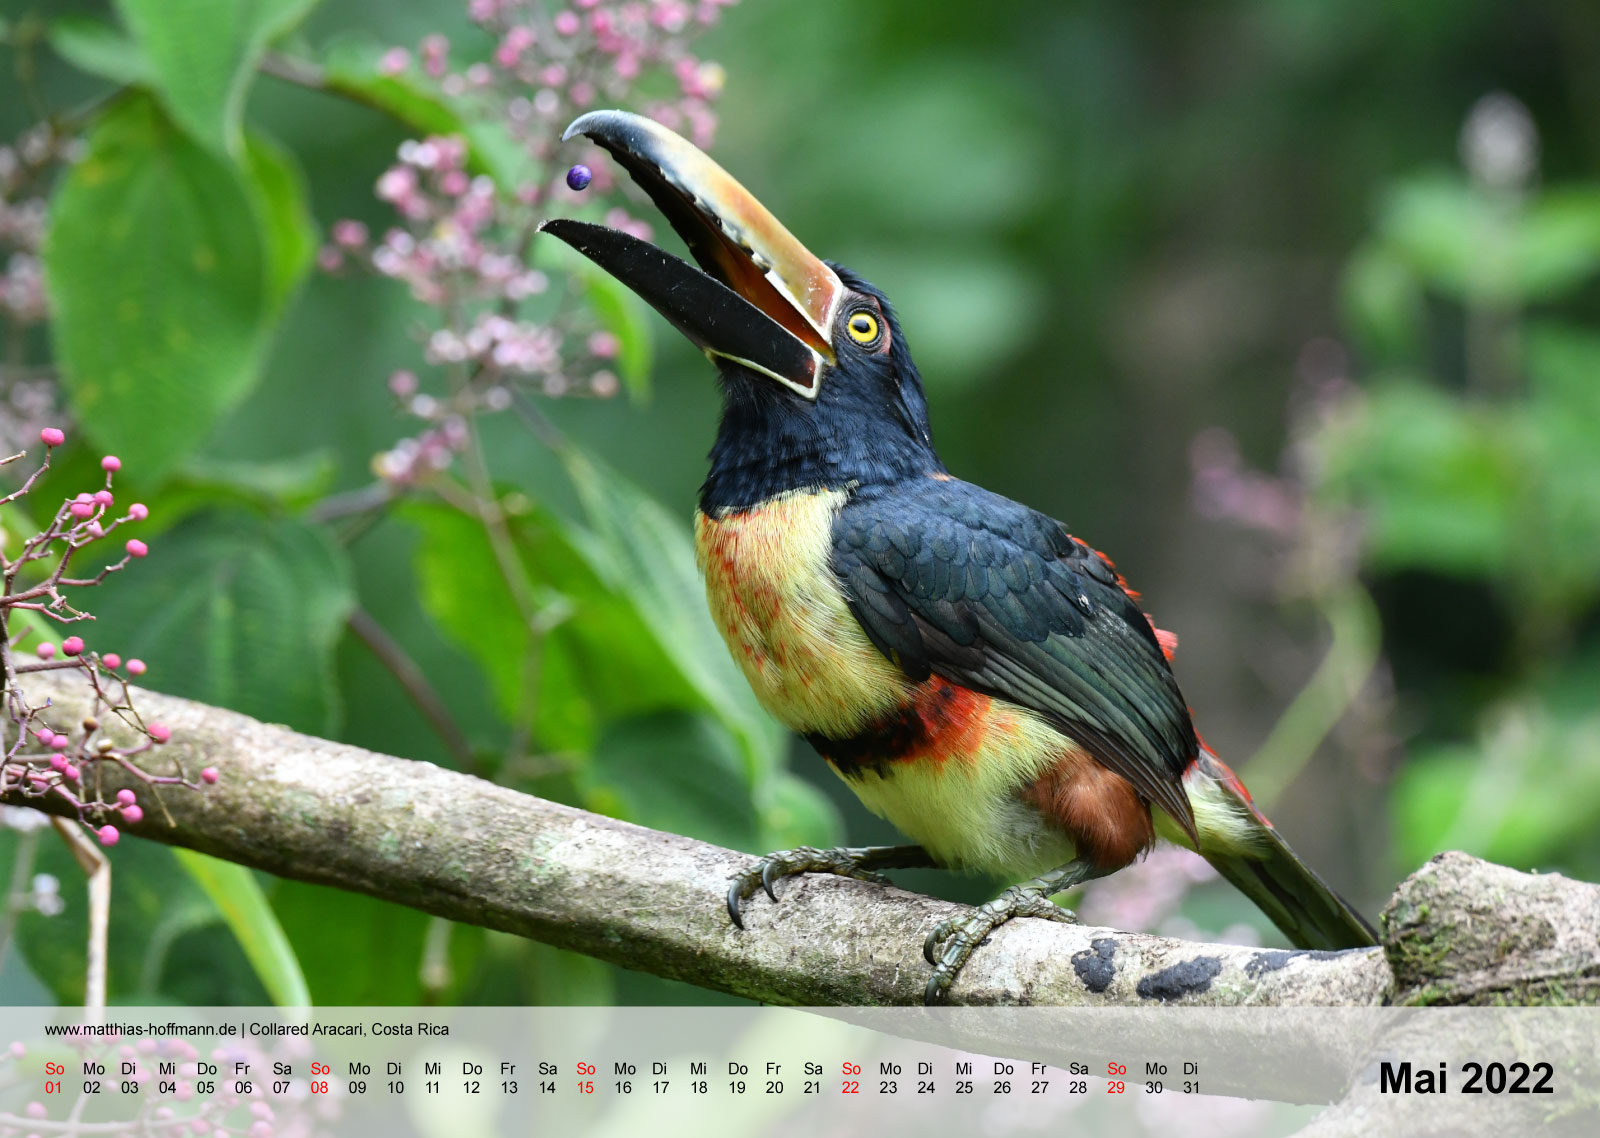 Collared Aracari, Costa Rica | Kalender 2022 - Mai